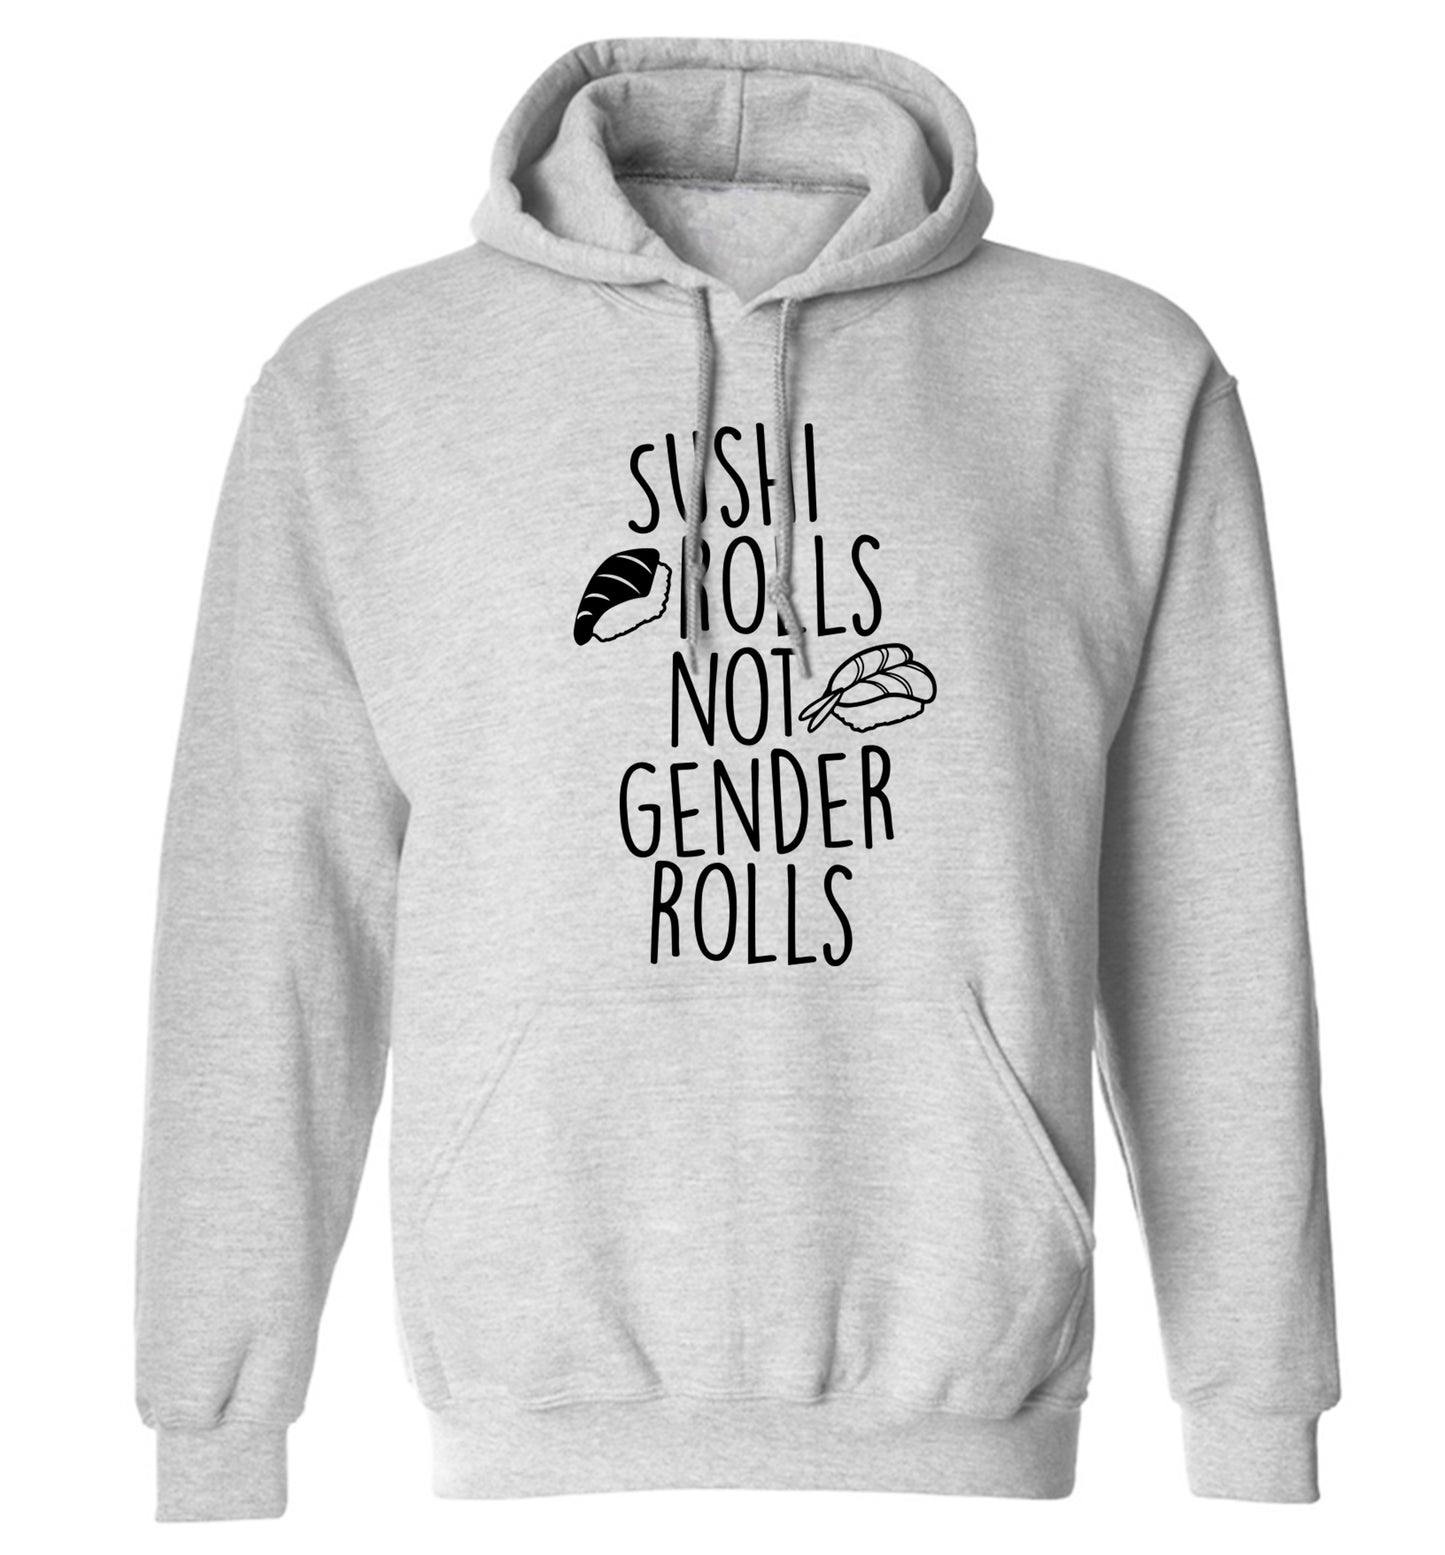 Sushi rolls not gender rolls adults unisex grey hoodie 2XL